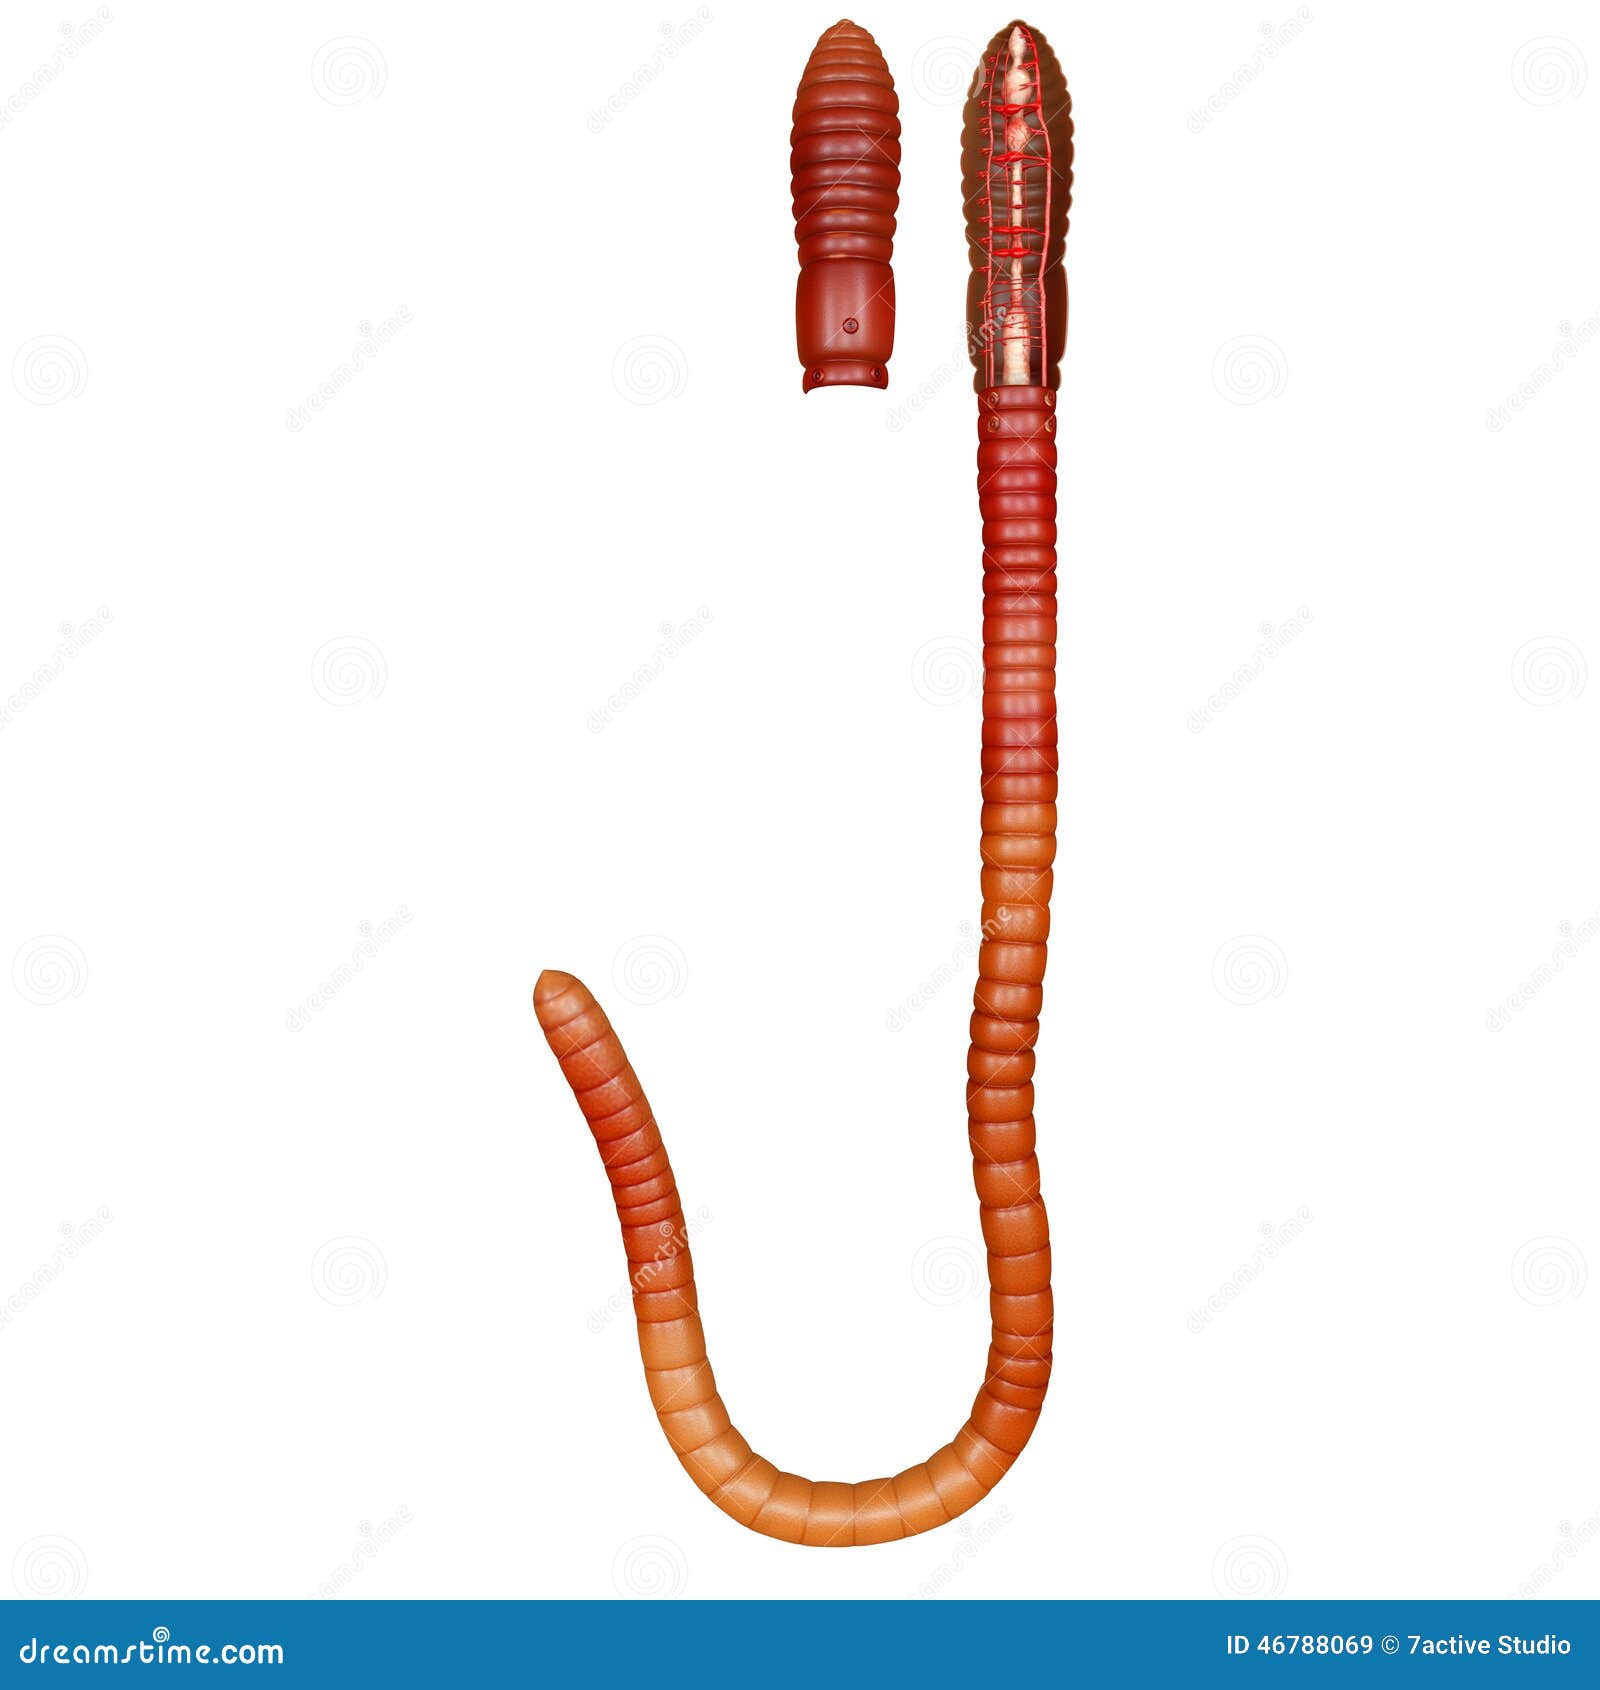 Circulatory System Of Earthworm Stock Illustration - Image: 46788069